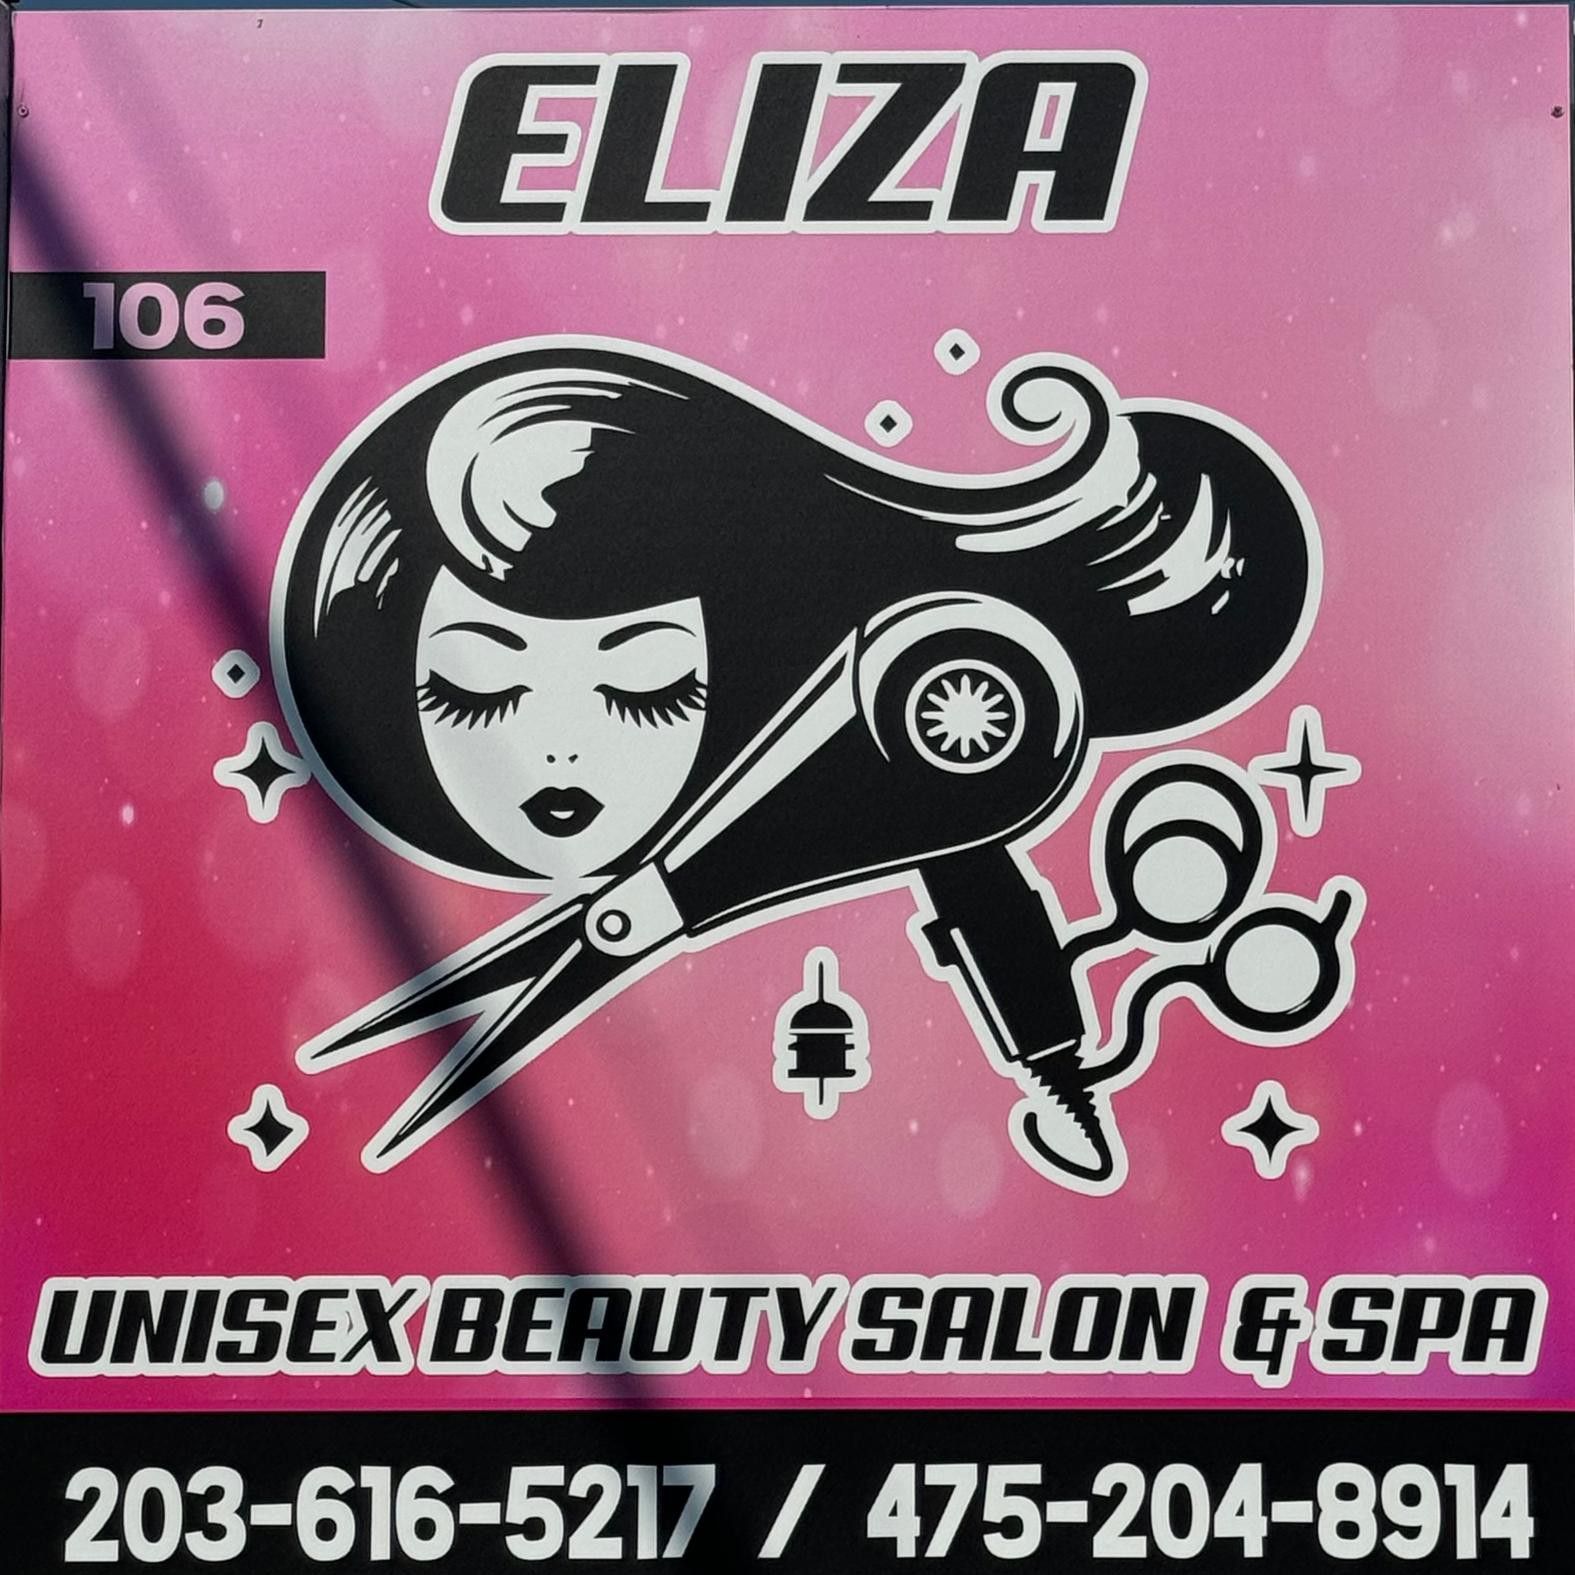 Eliza Unisex Beauty Salon & Spa, 106 South St, Danbury, 06810